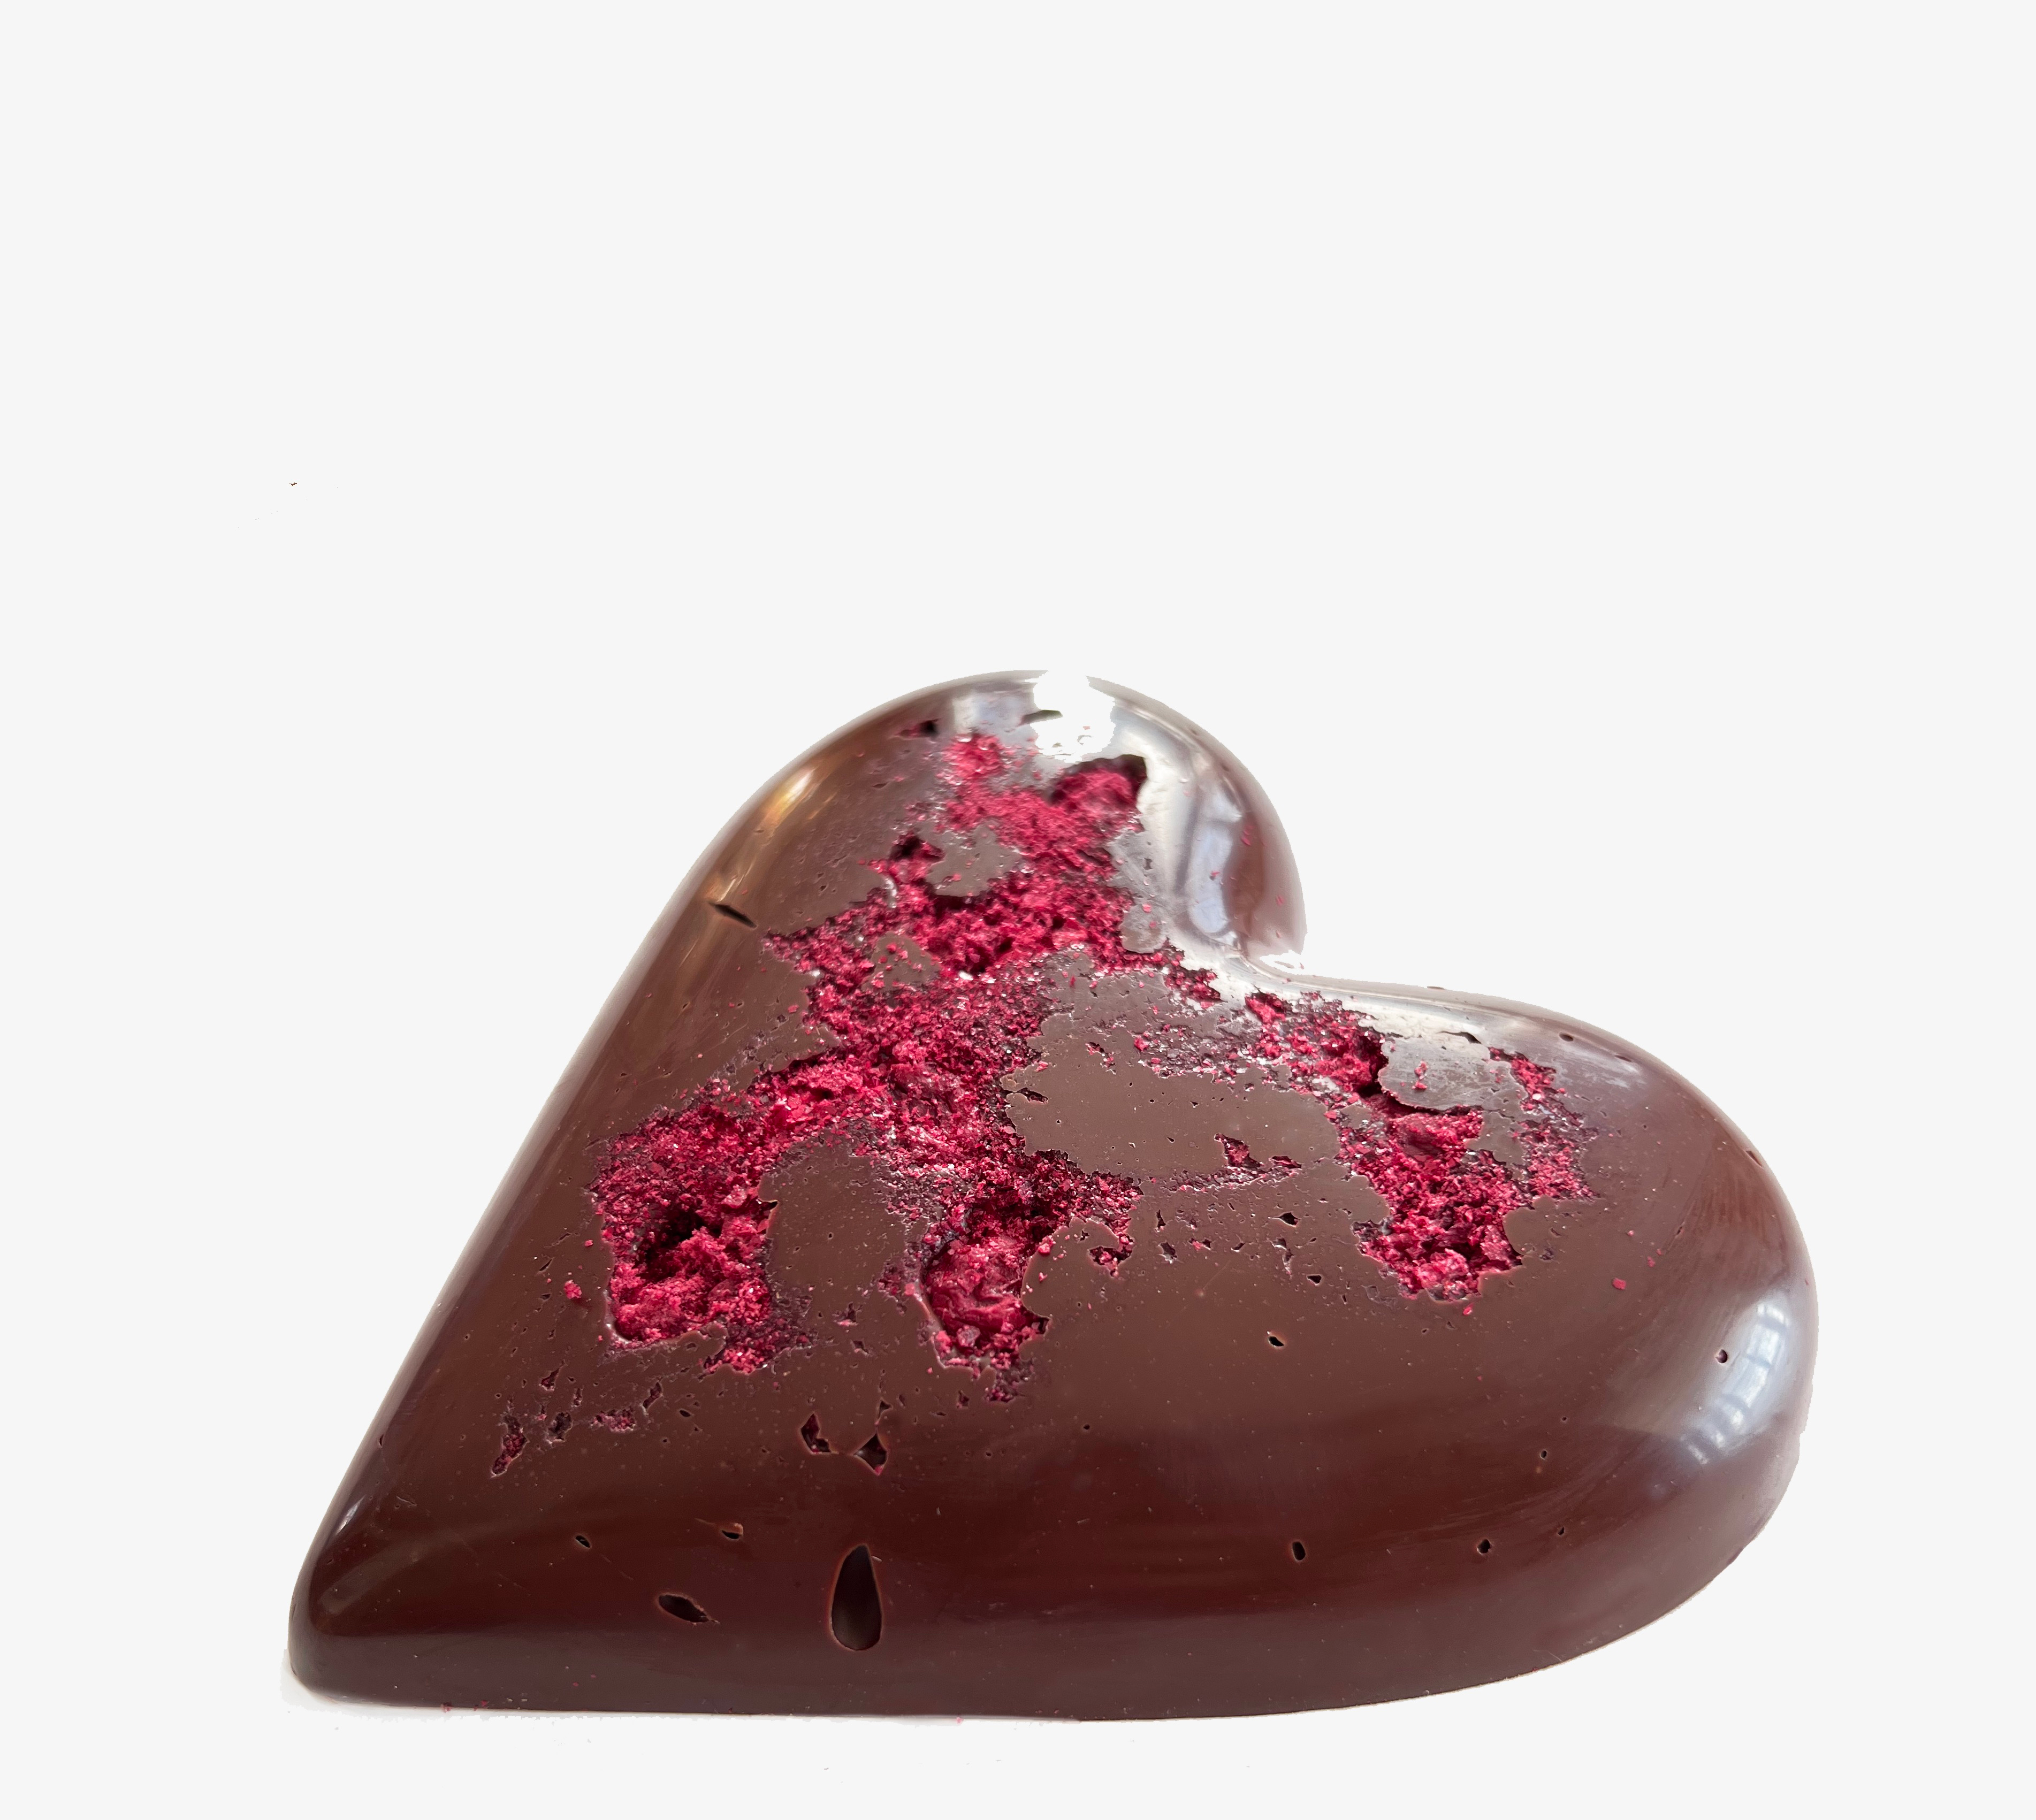 A chocolate truffle heart from SOMA Chocolatemaker